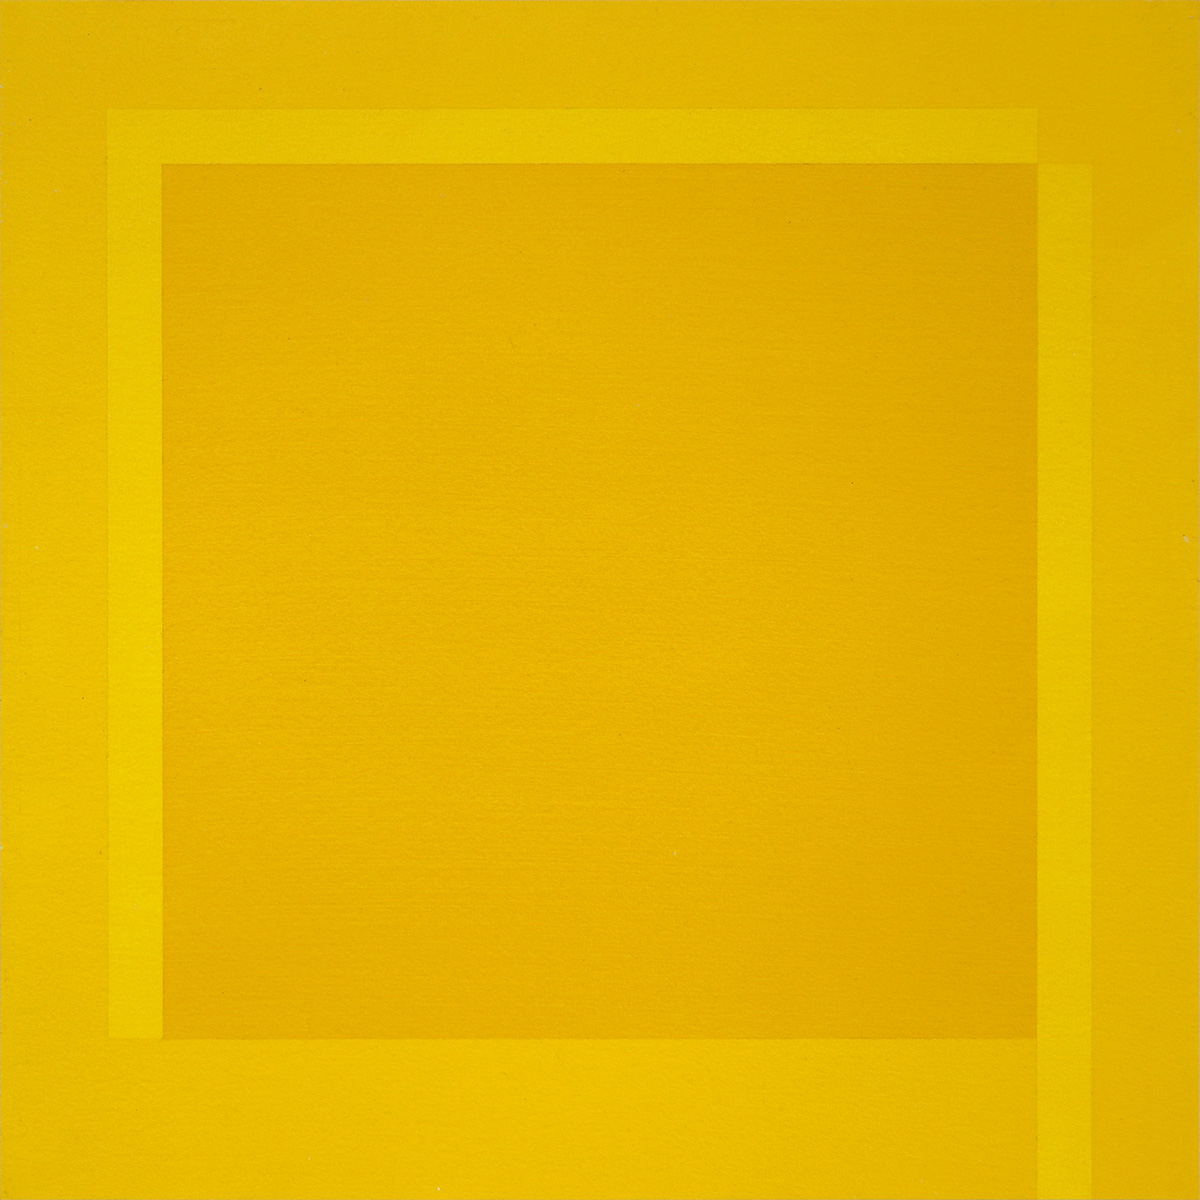 Dimension 19 (Gelb), 200655 x 55 cmAcryl auf Papier, auf Auludibond